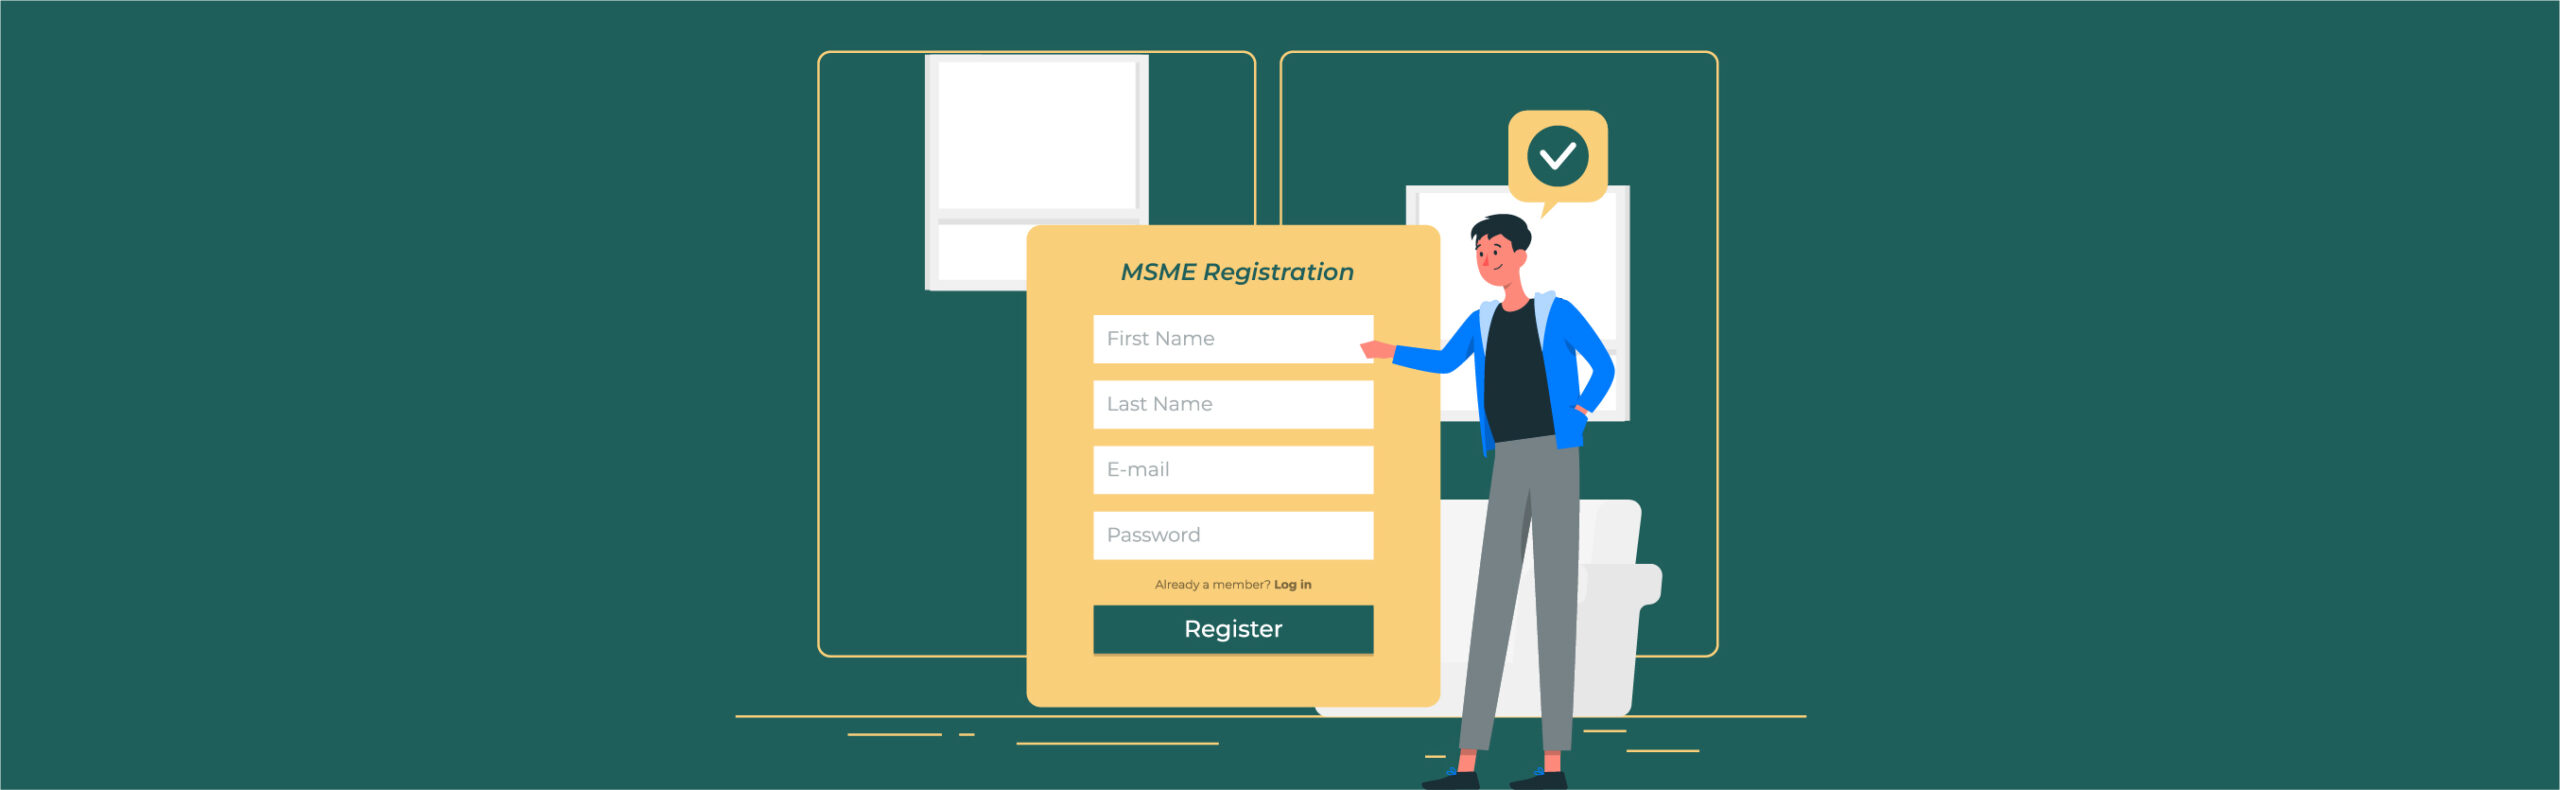 8 key benefits of obtaining MSME registration